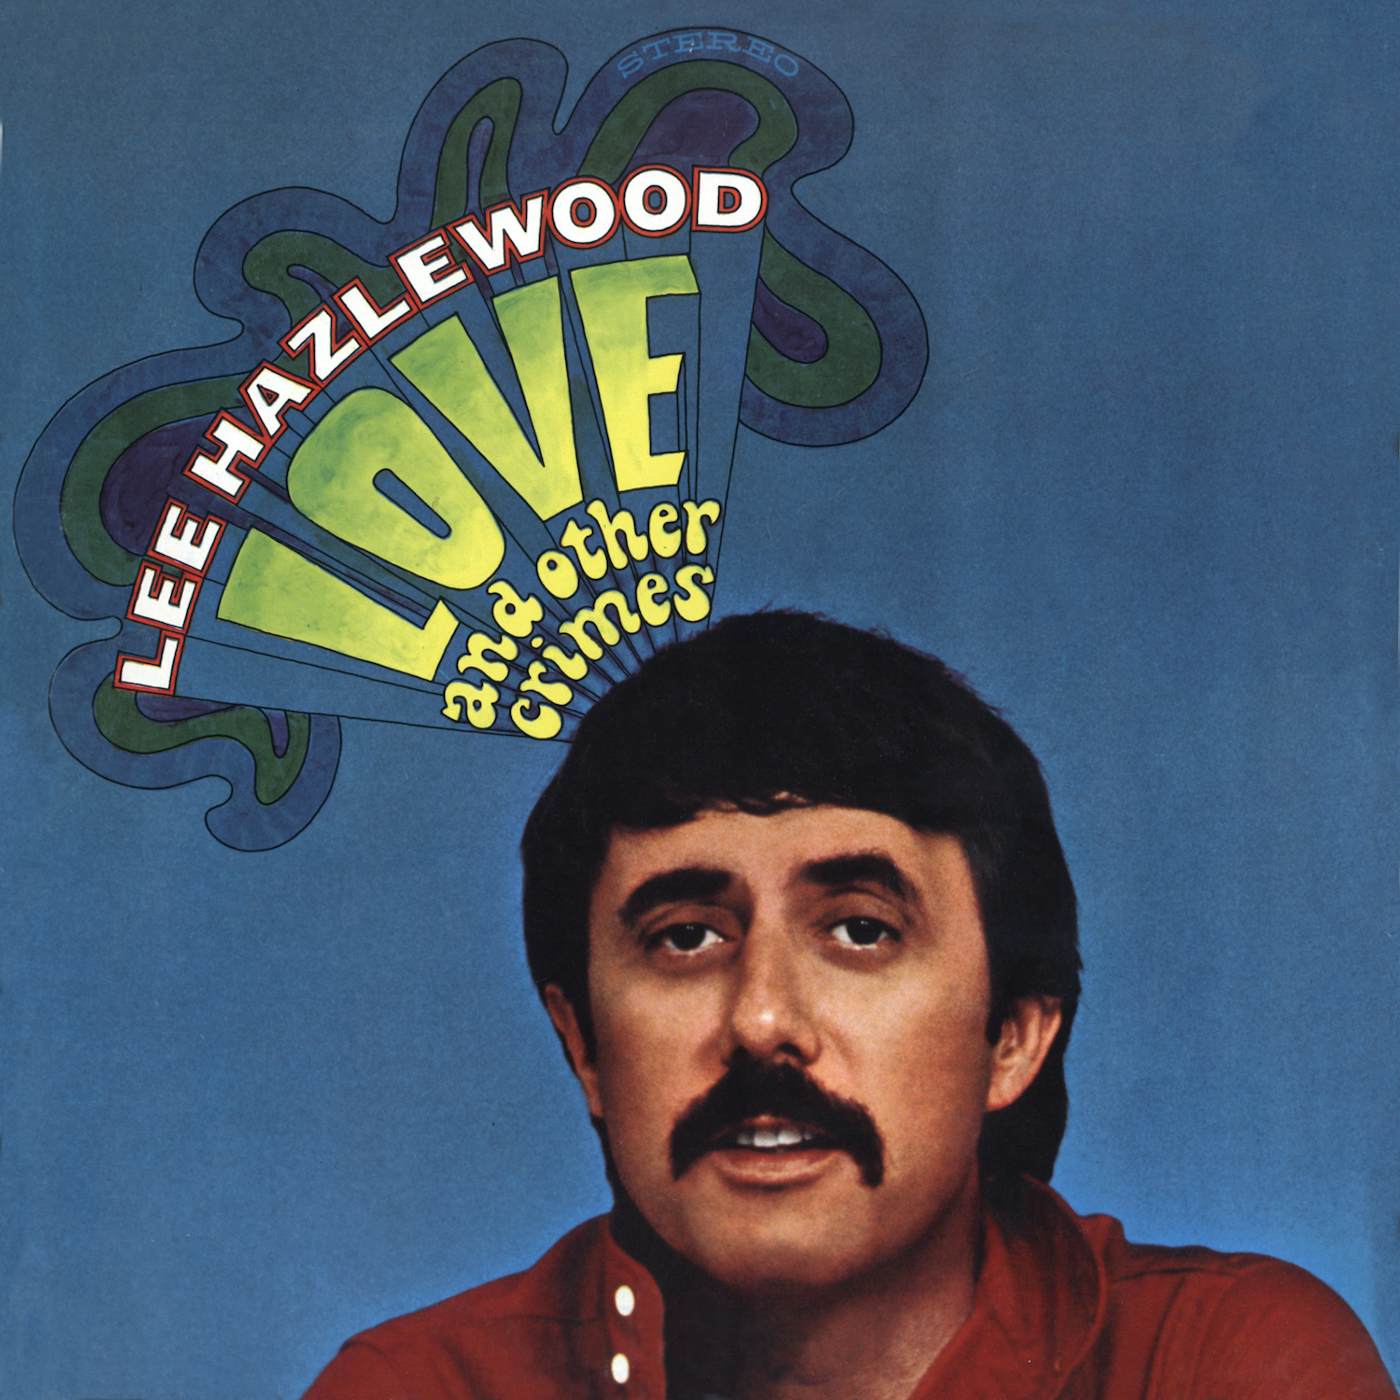 Lee Hazlewood Love and Other Crimes Vinyl Record